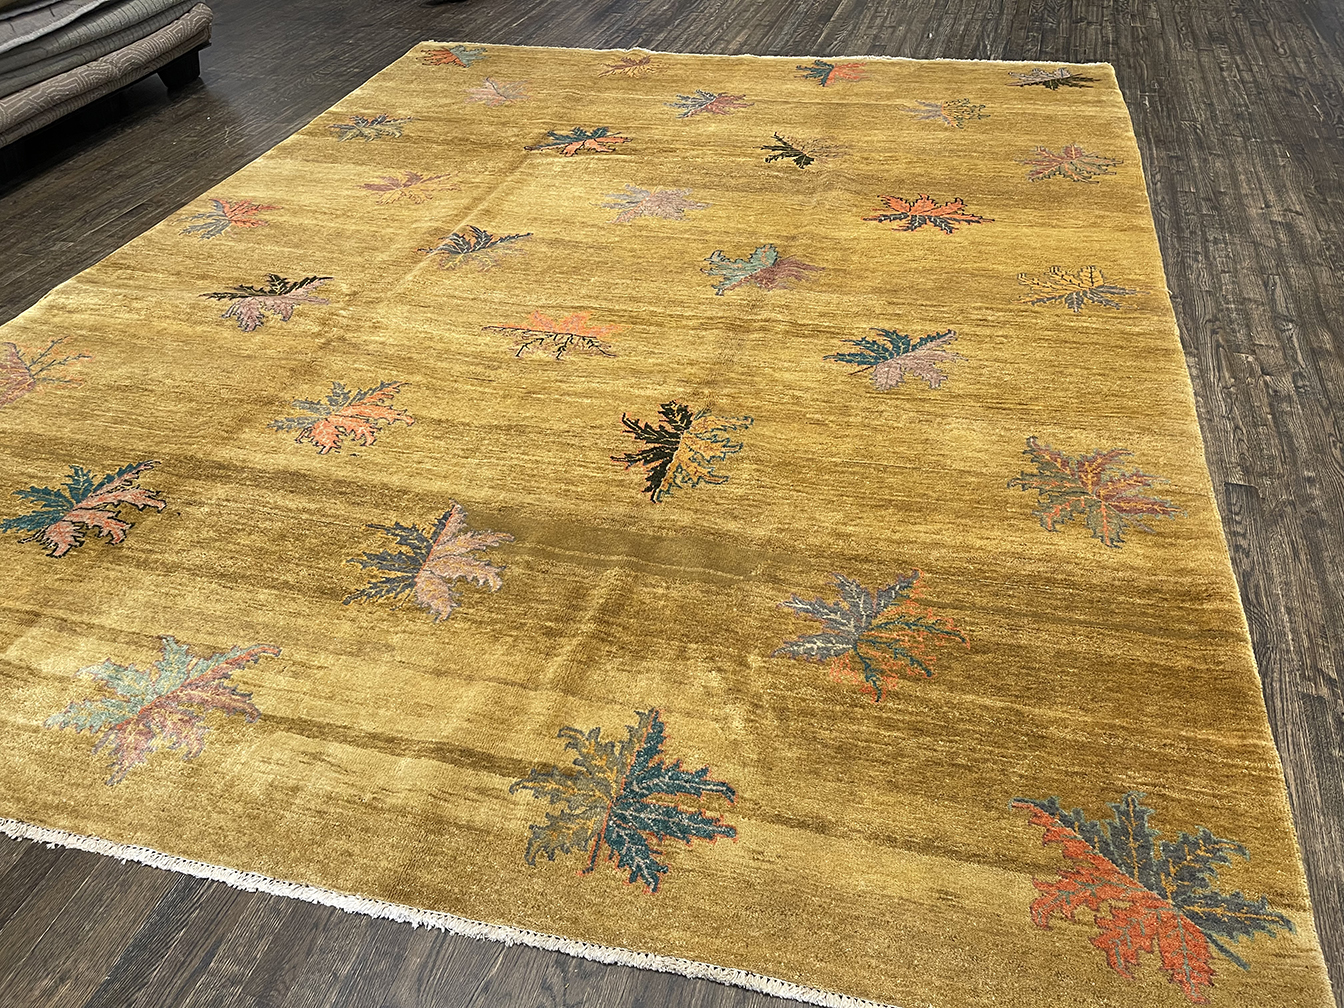 Modern art deco Carpet - # 56169